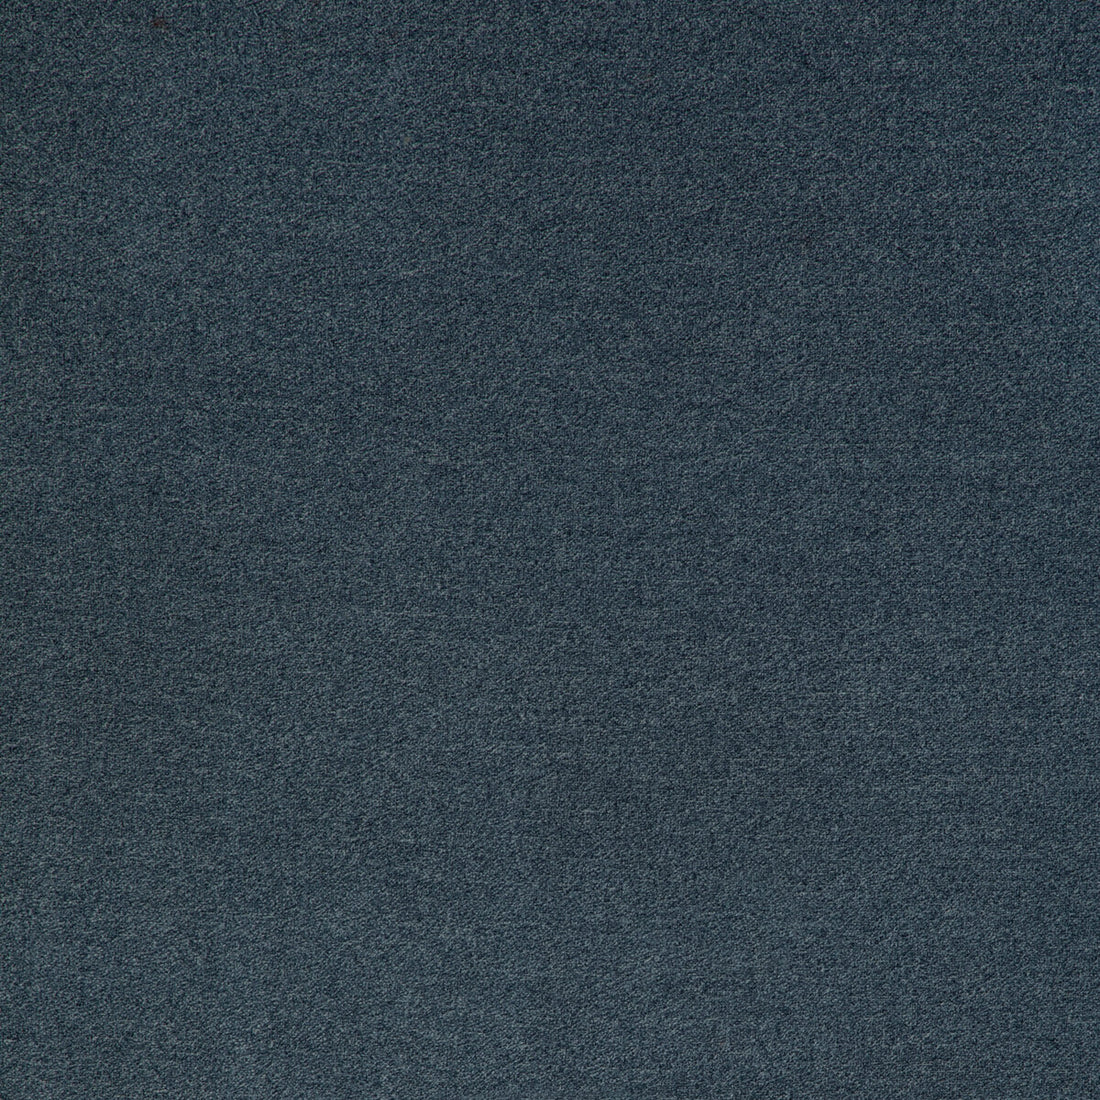 Kravet Smart fabric in 37000-505 color - pattern 37000.505.0 - by Kravet Smart in the Performance Kravetarmor collection